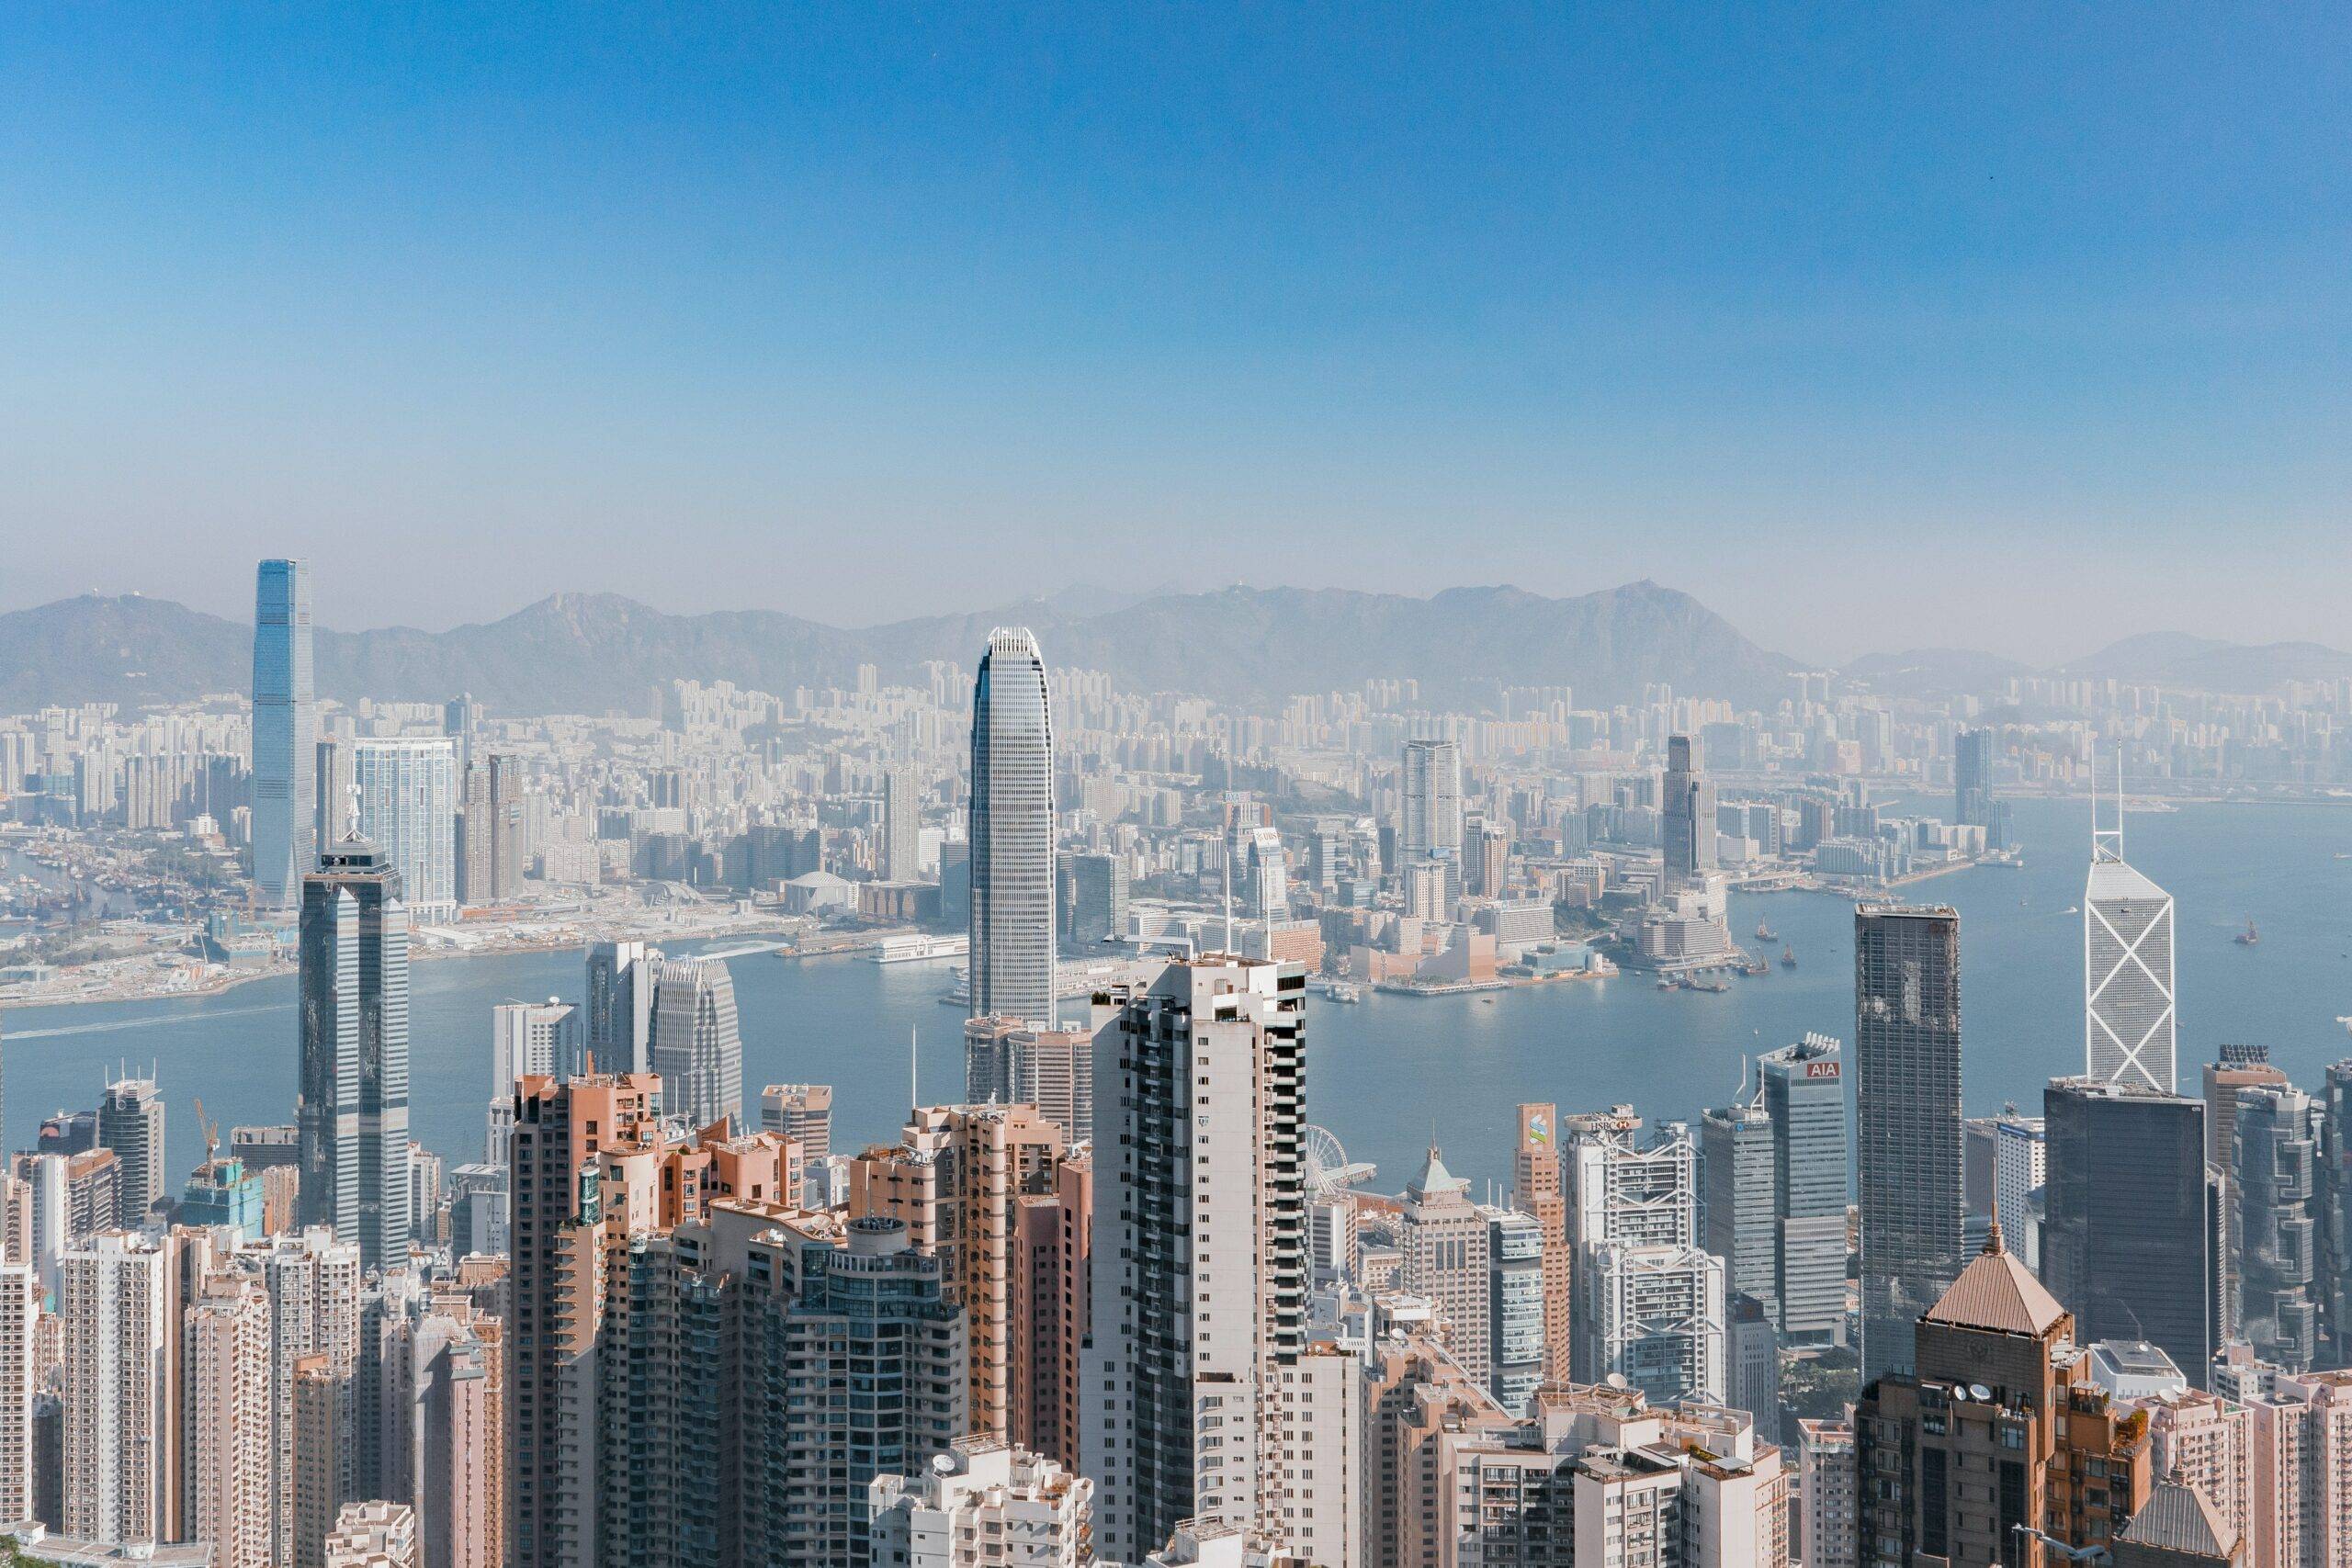 International unicorns, founders and innovators thrive in Hong Kong